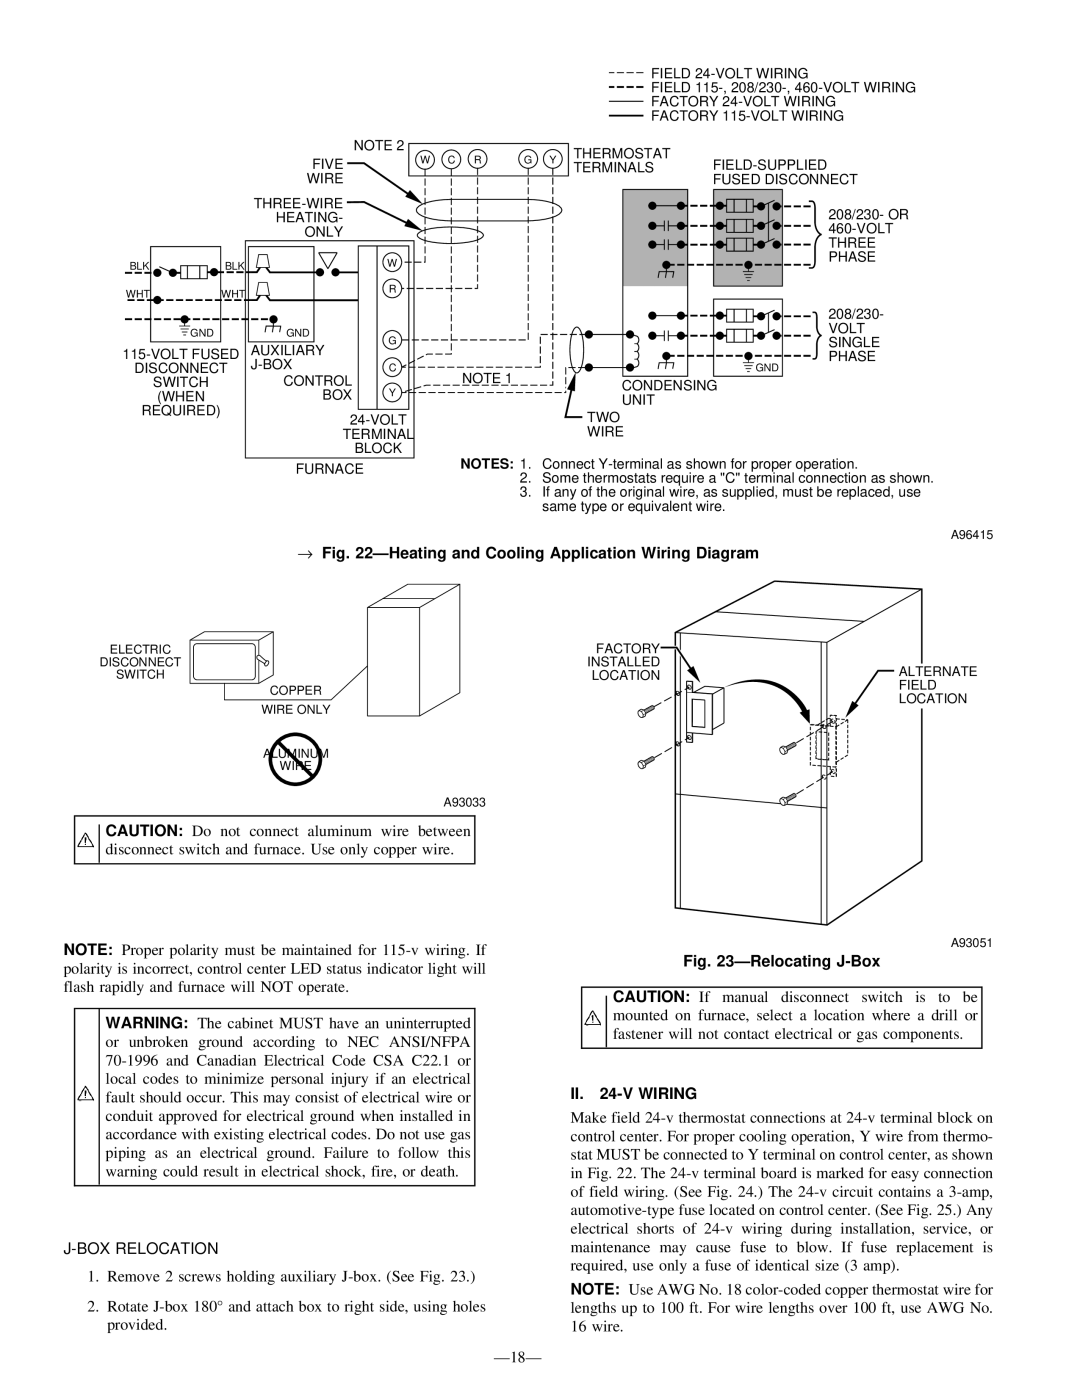 Bryant 340MAV instruction manual → ÐHeating and Cooling Application Wiring Diagram, II -V Wiring 